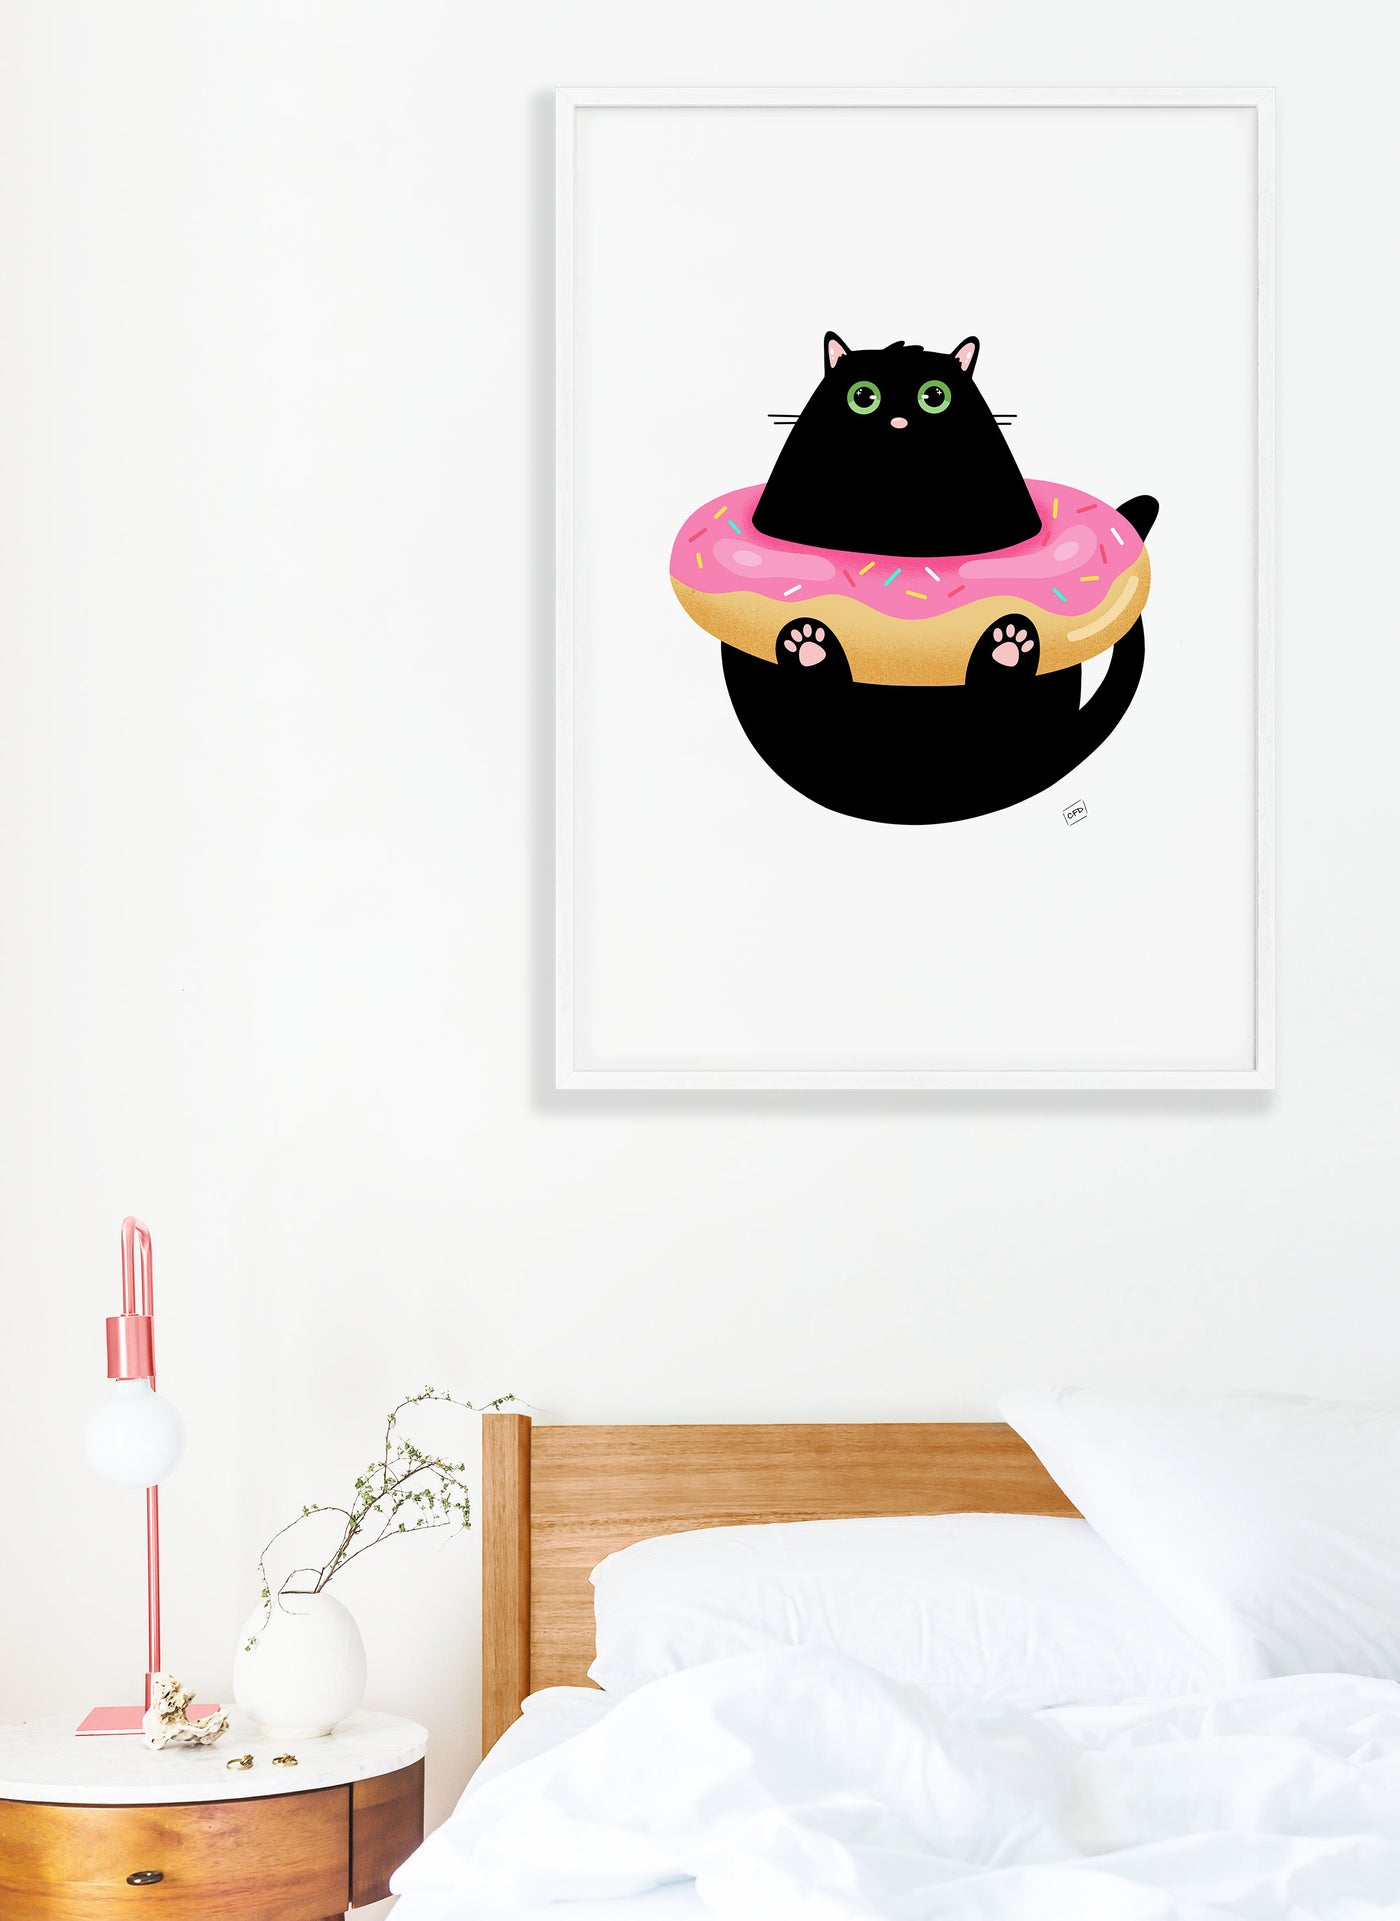 Black Cat Donut Print